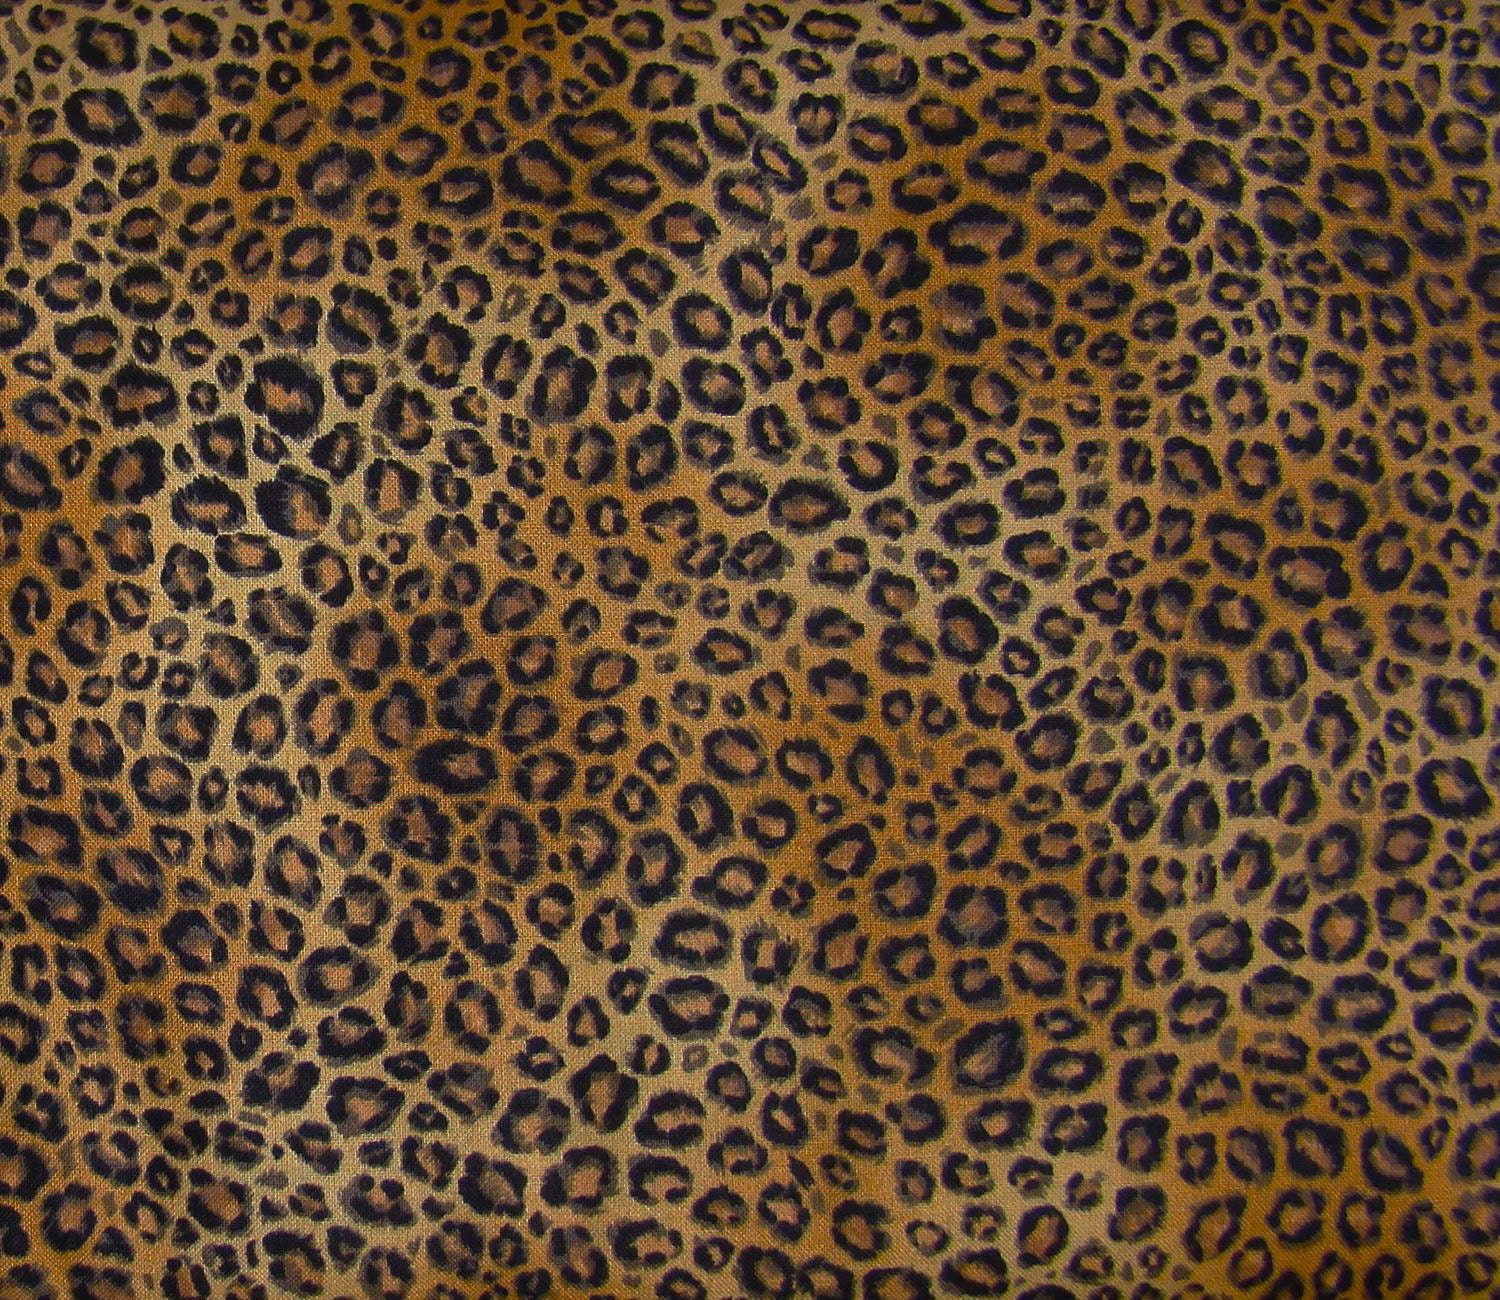 Leopard print Jungle Fever Fabric | Etsy